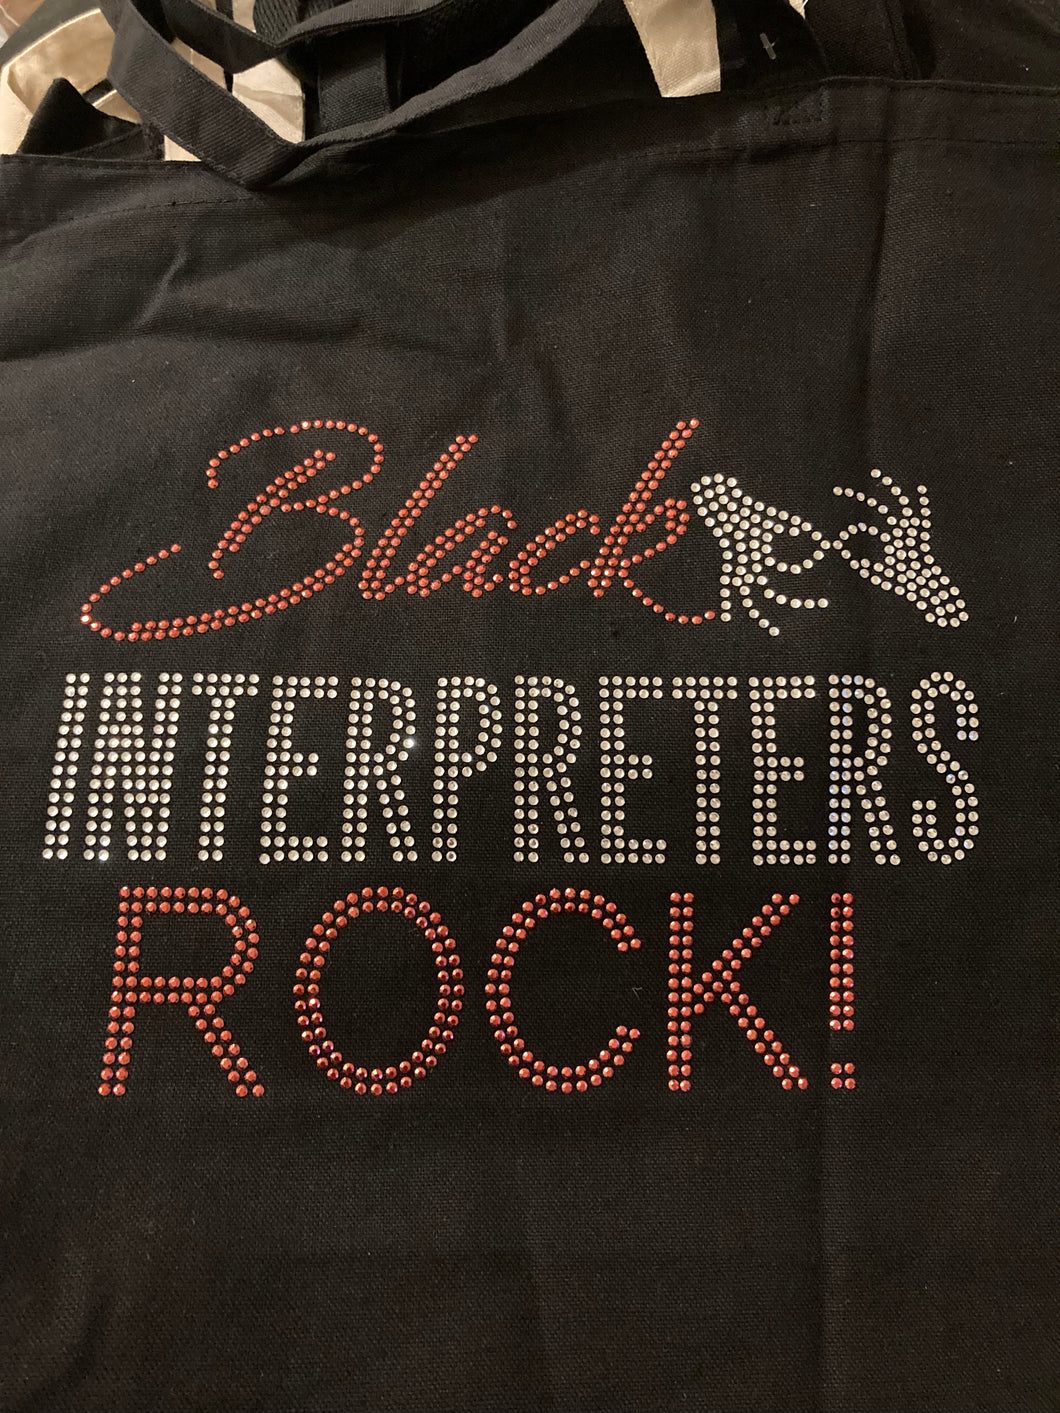 Black Interpreters Rock/Interpreters of Color Tote Bag